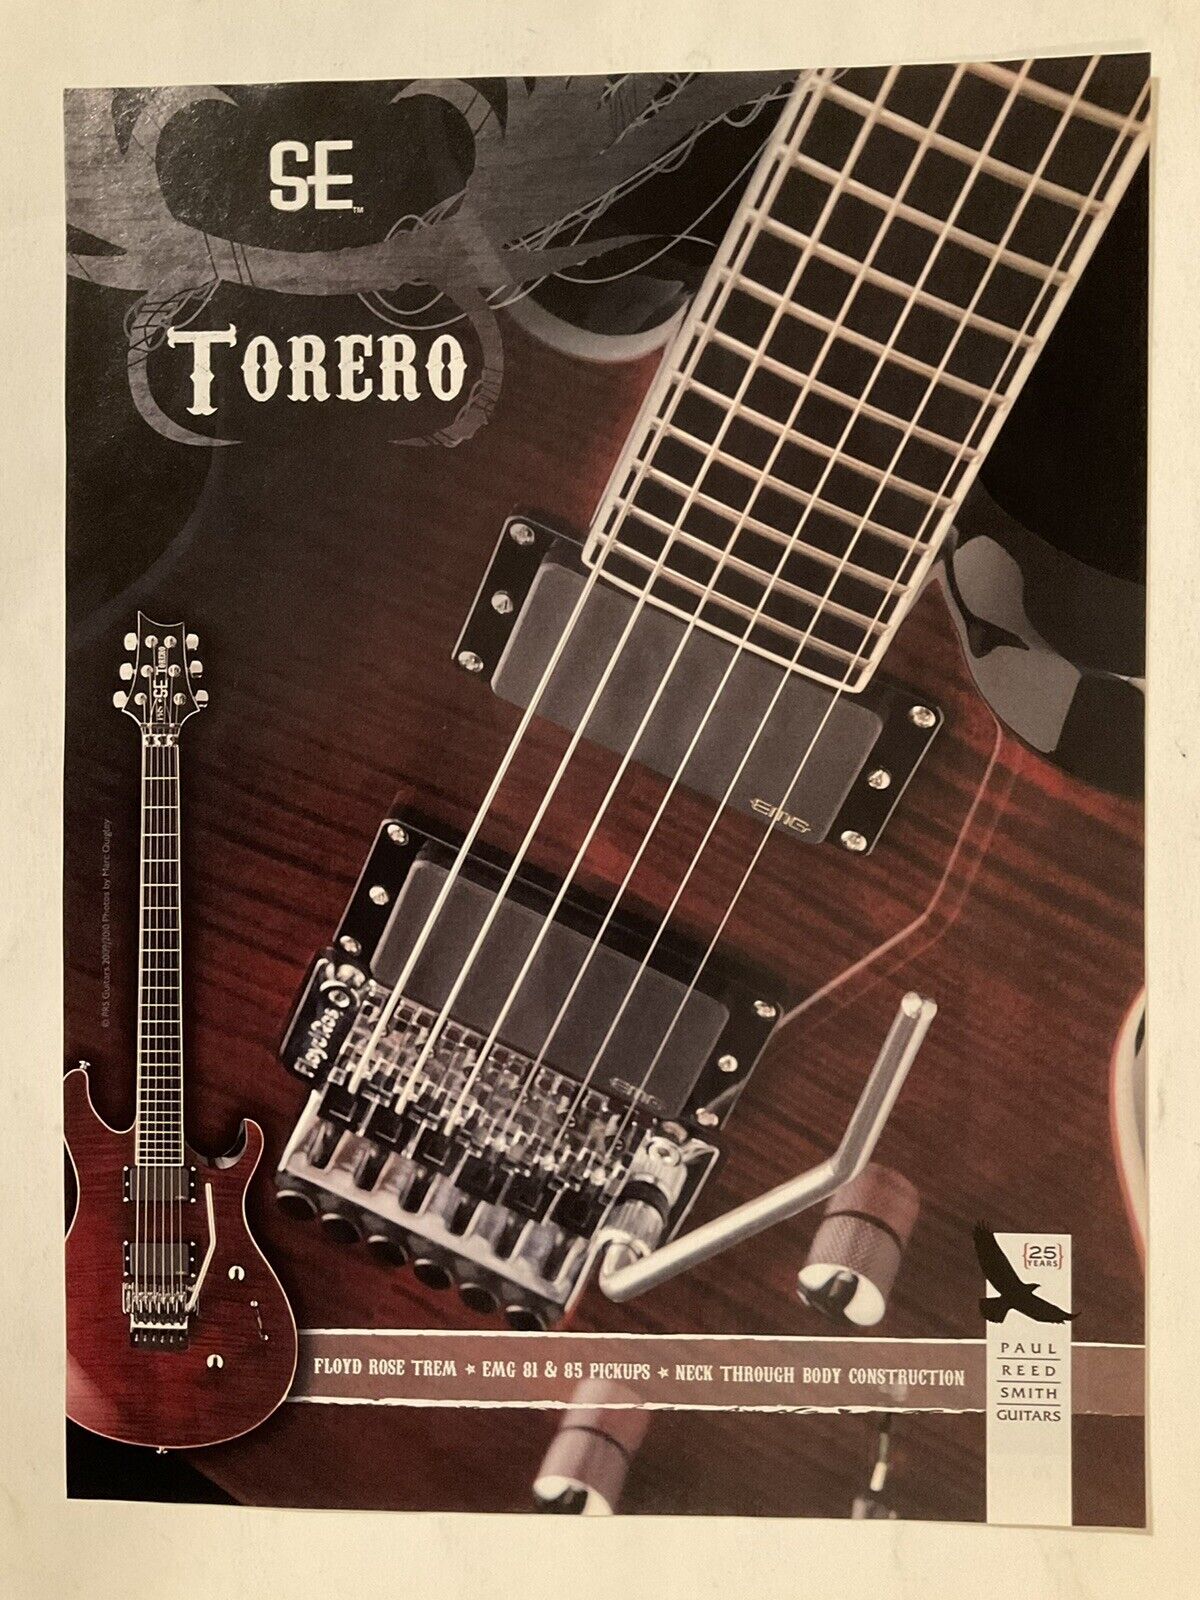 Paul Reed Smith Guitars PRS Print Ad 2010 SE TORERO 25 Years VTG Original  10-1